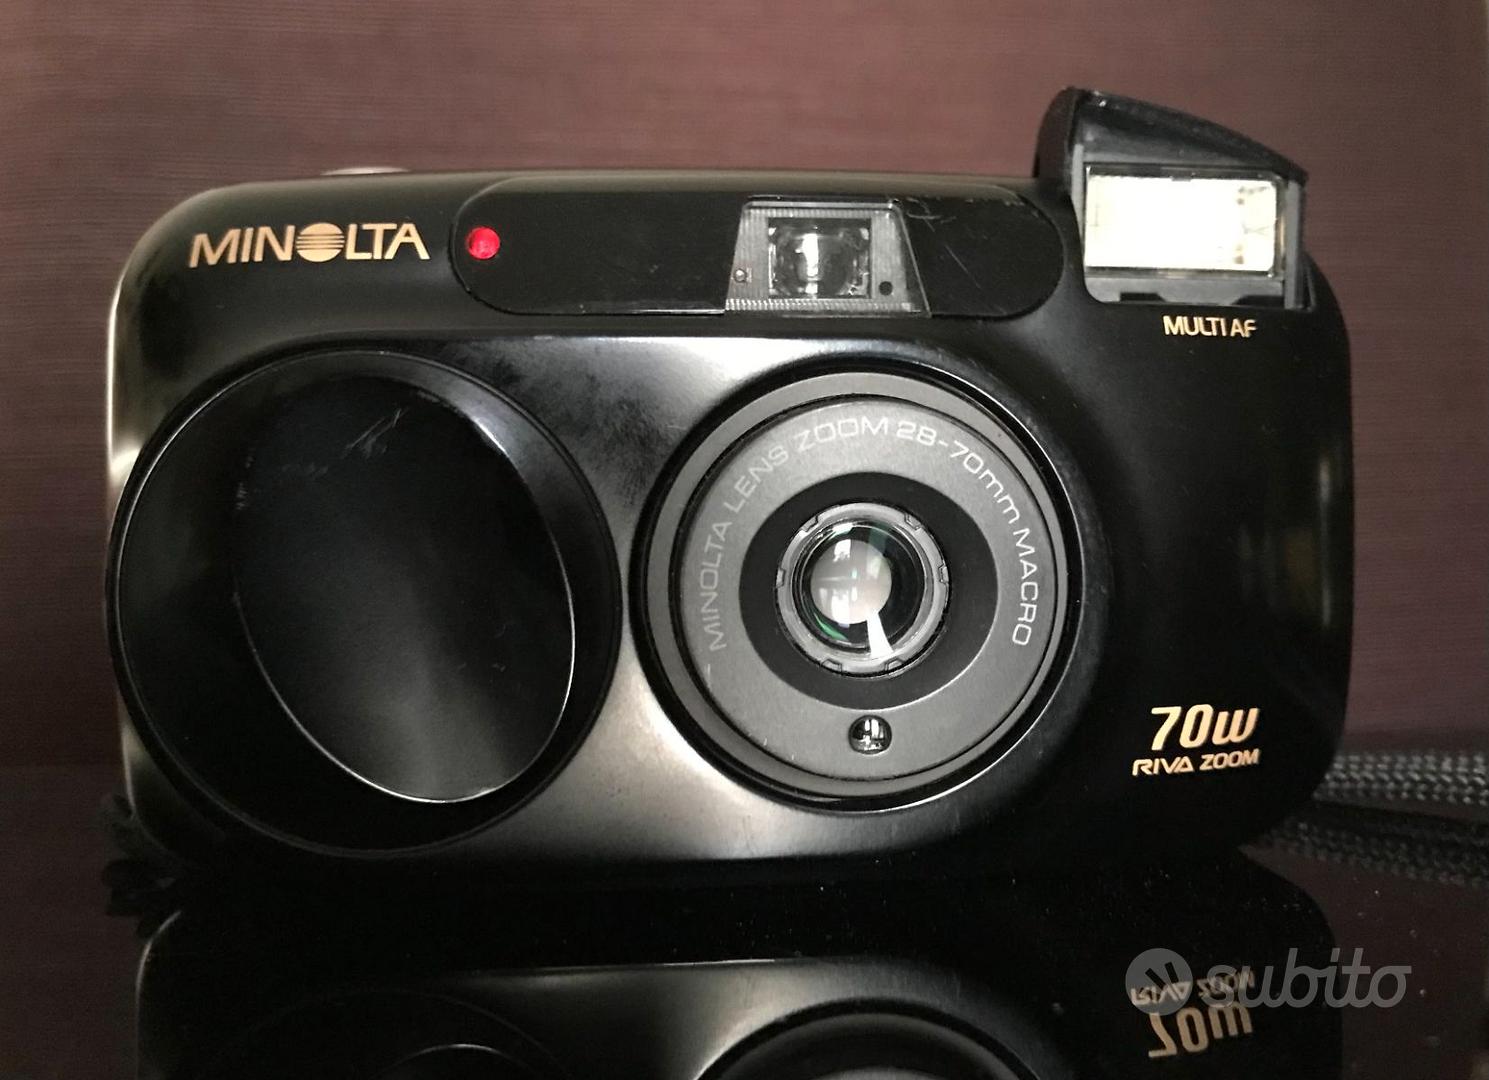 MINOLTA ＲＩＶＡ ZOOM 70w - フィルムカメラ